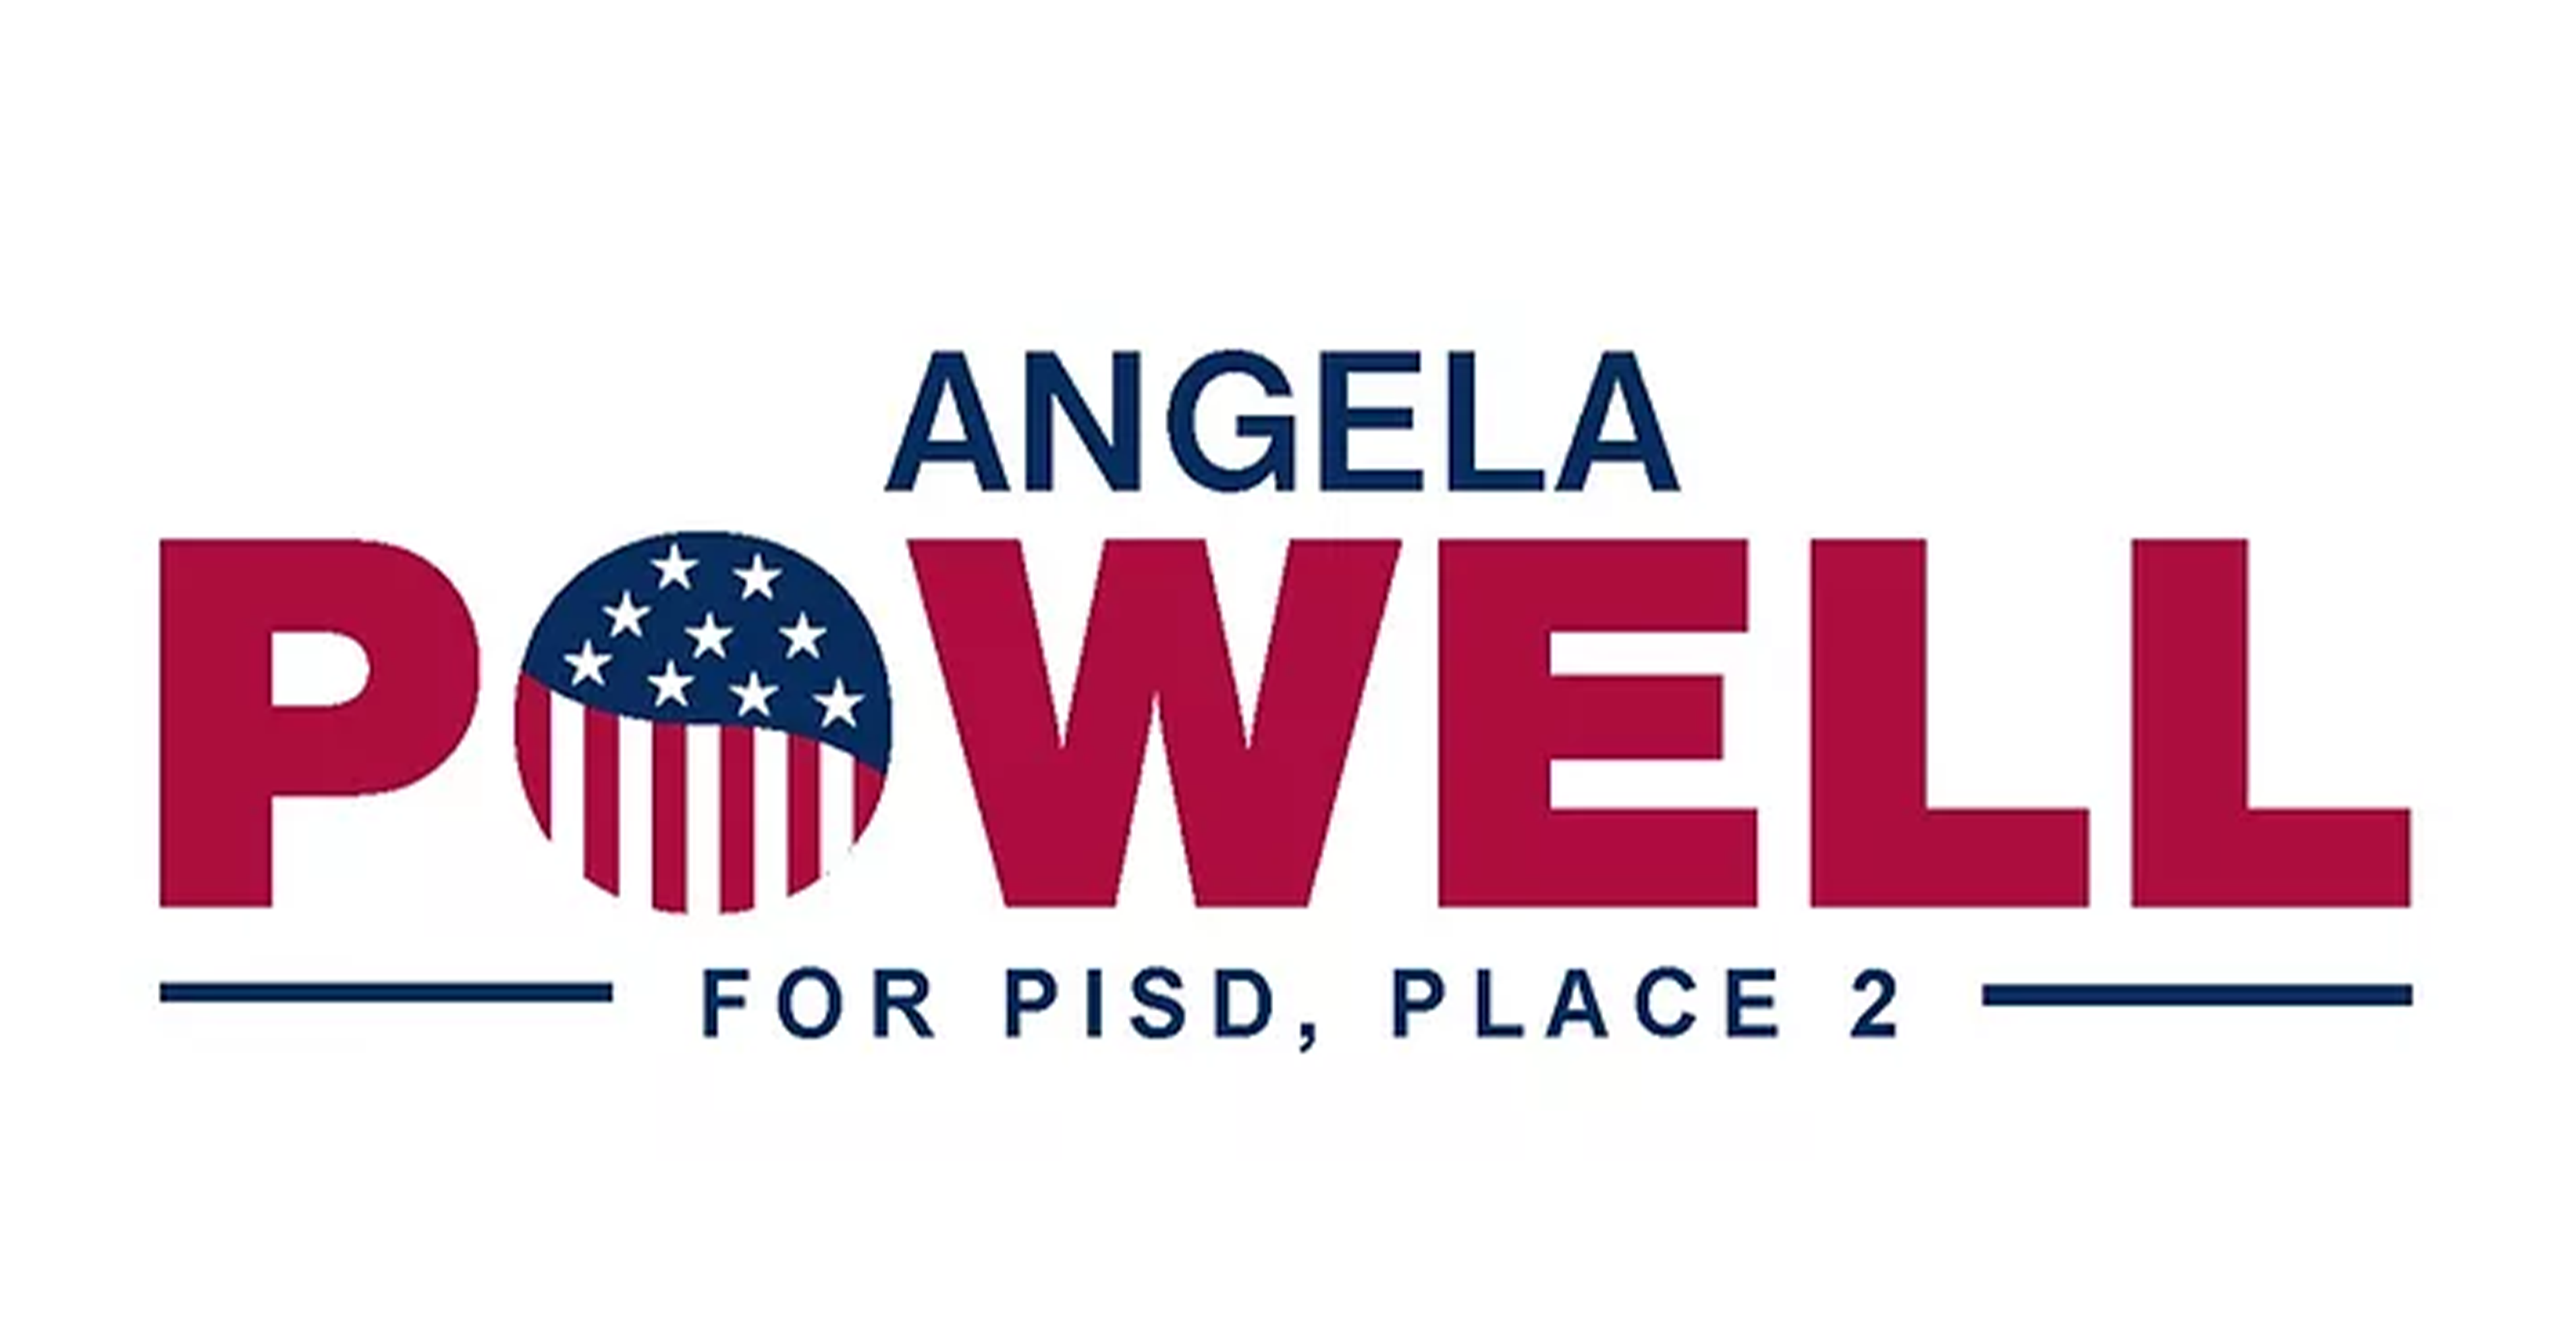 Angela Powell